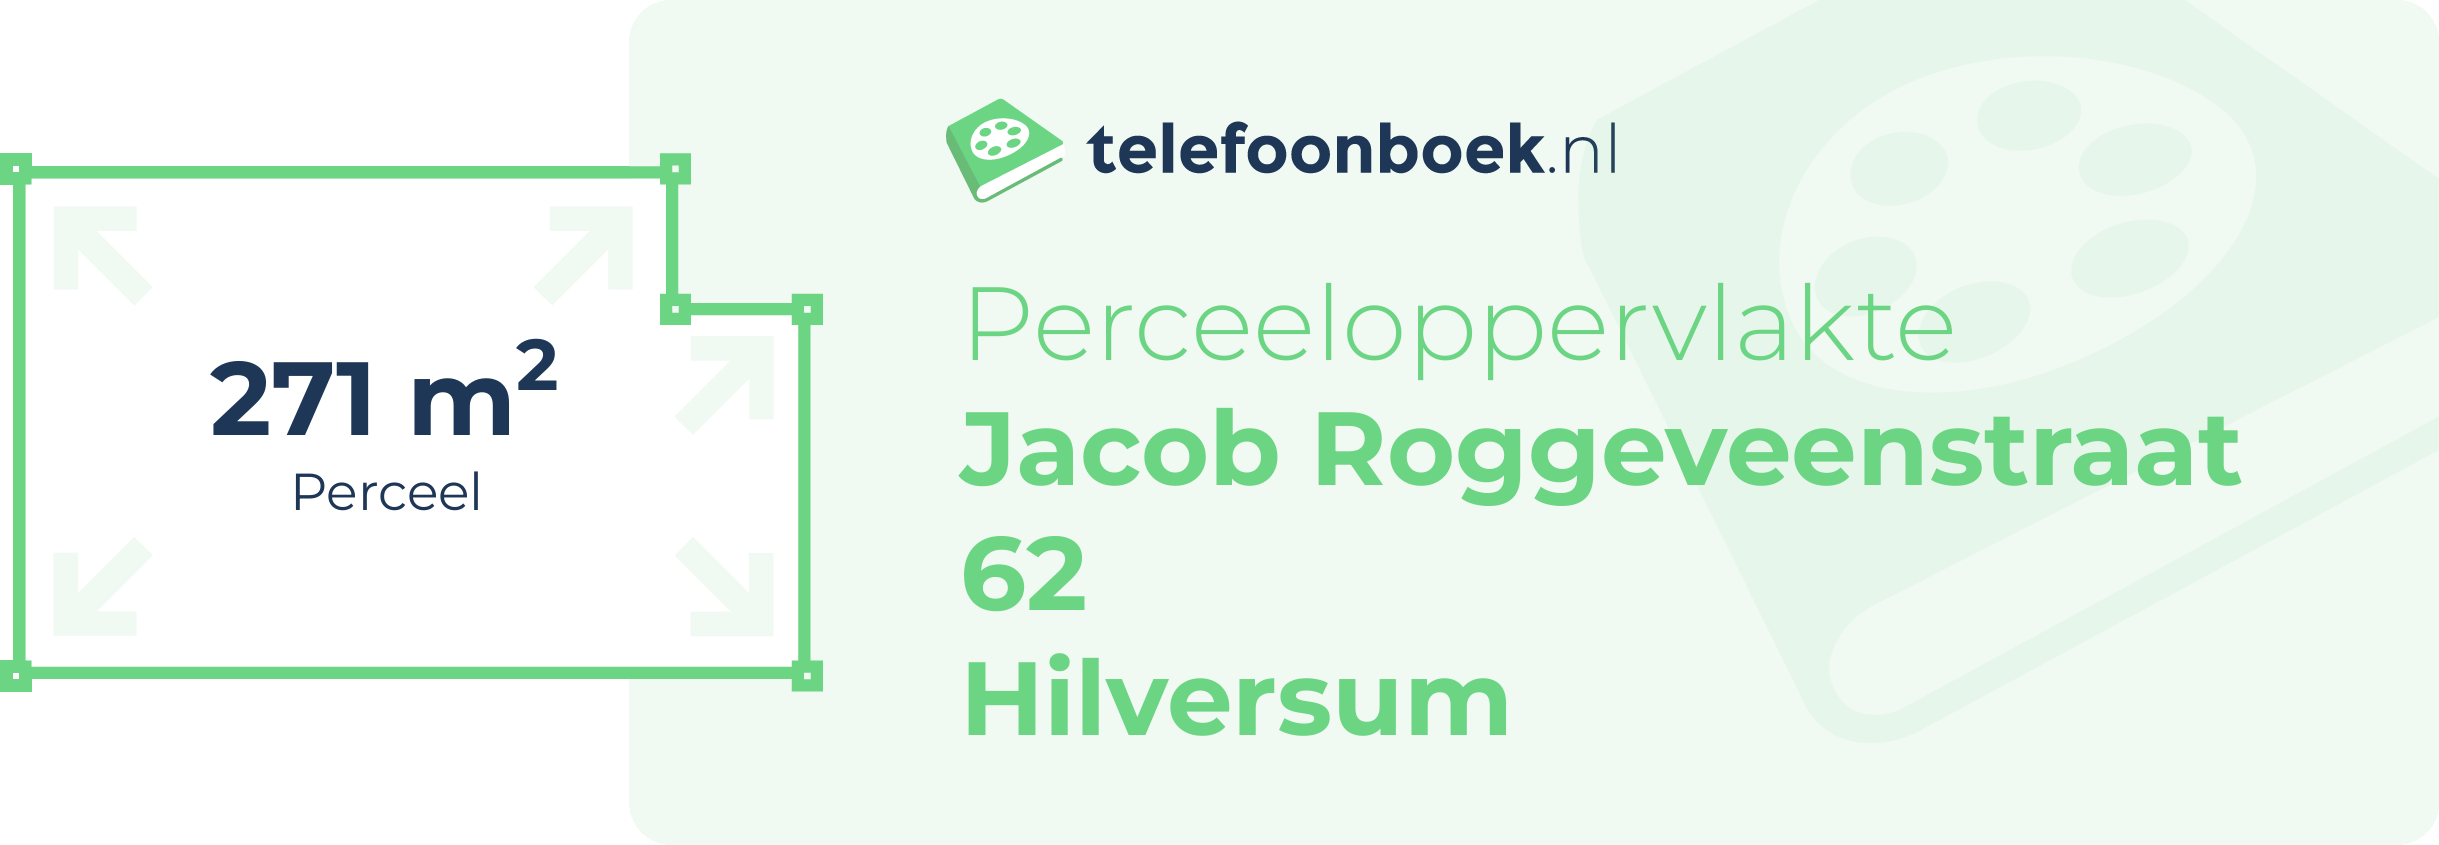 Perceeloppervlakte Jacob Roggeveenstraat 62 Hilversum